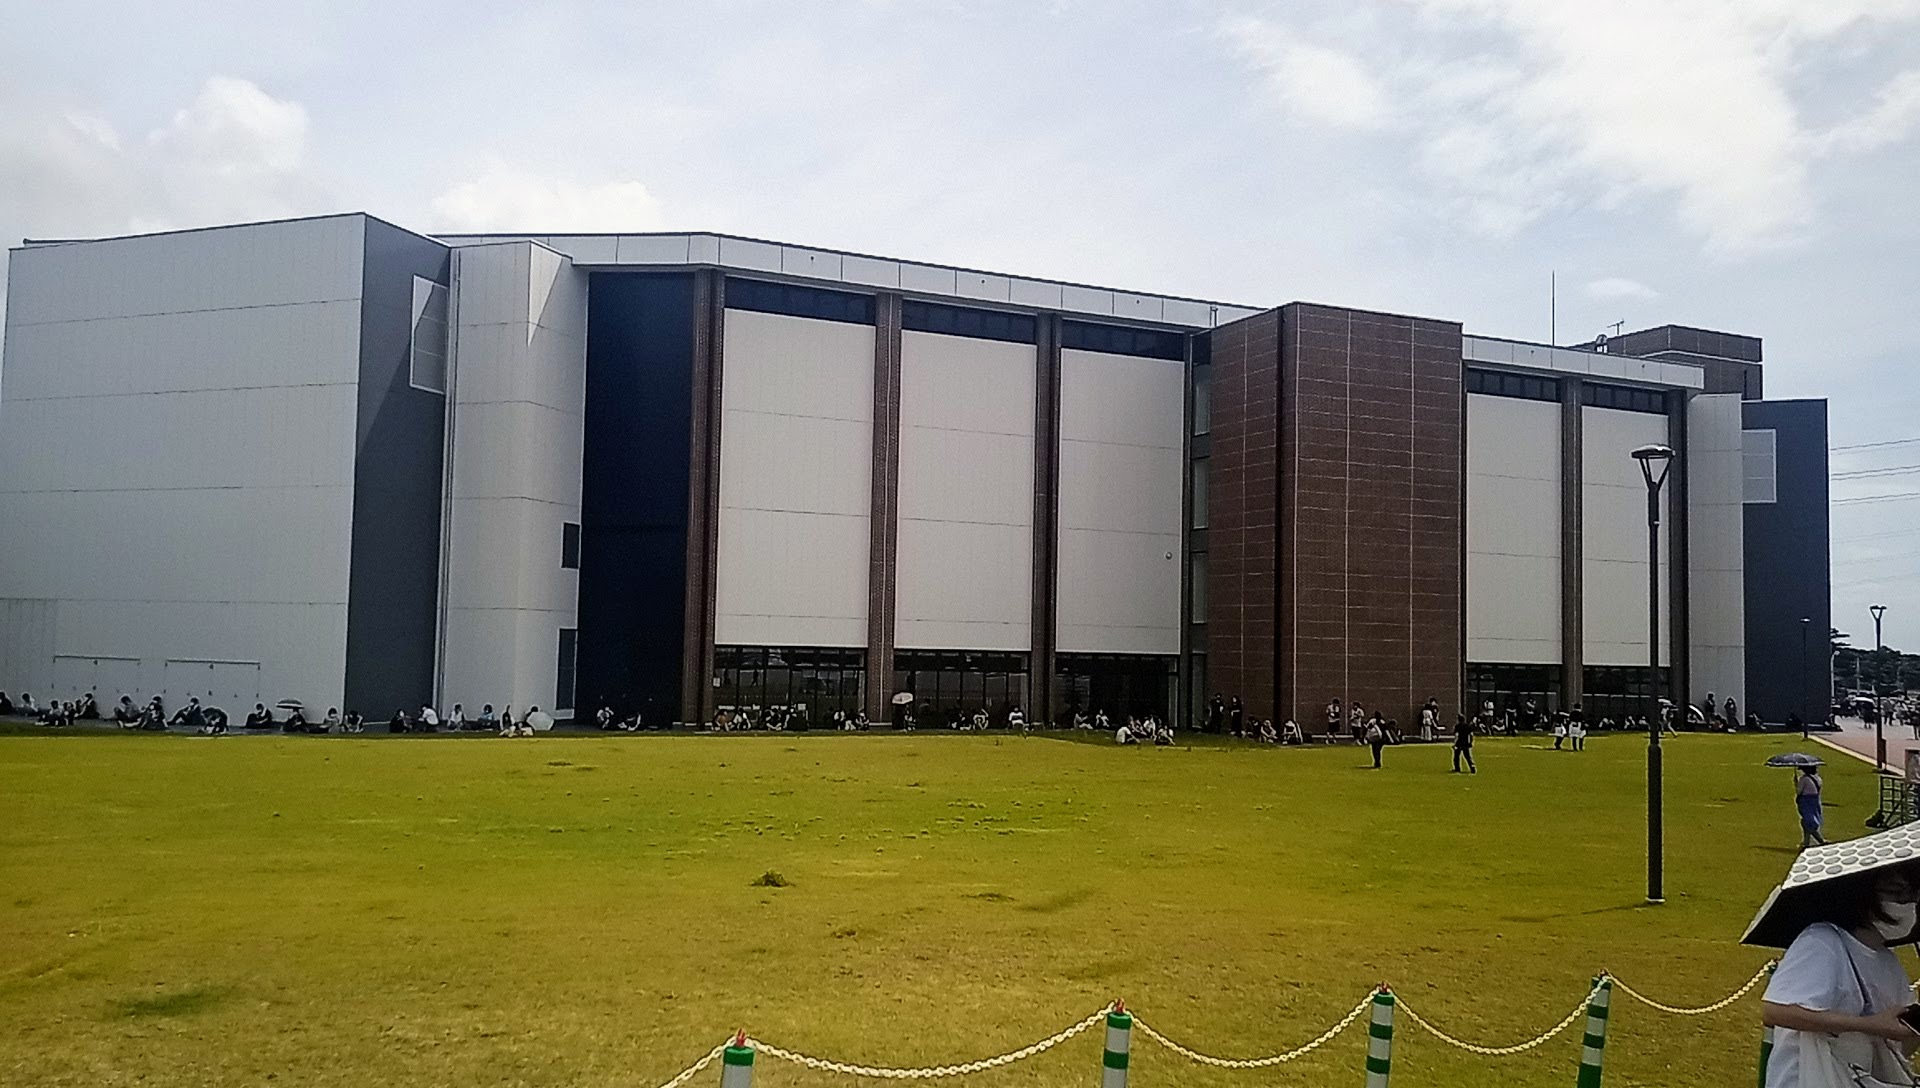 Okinawa Arena looks like this 1